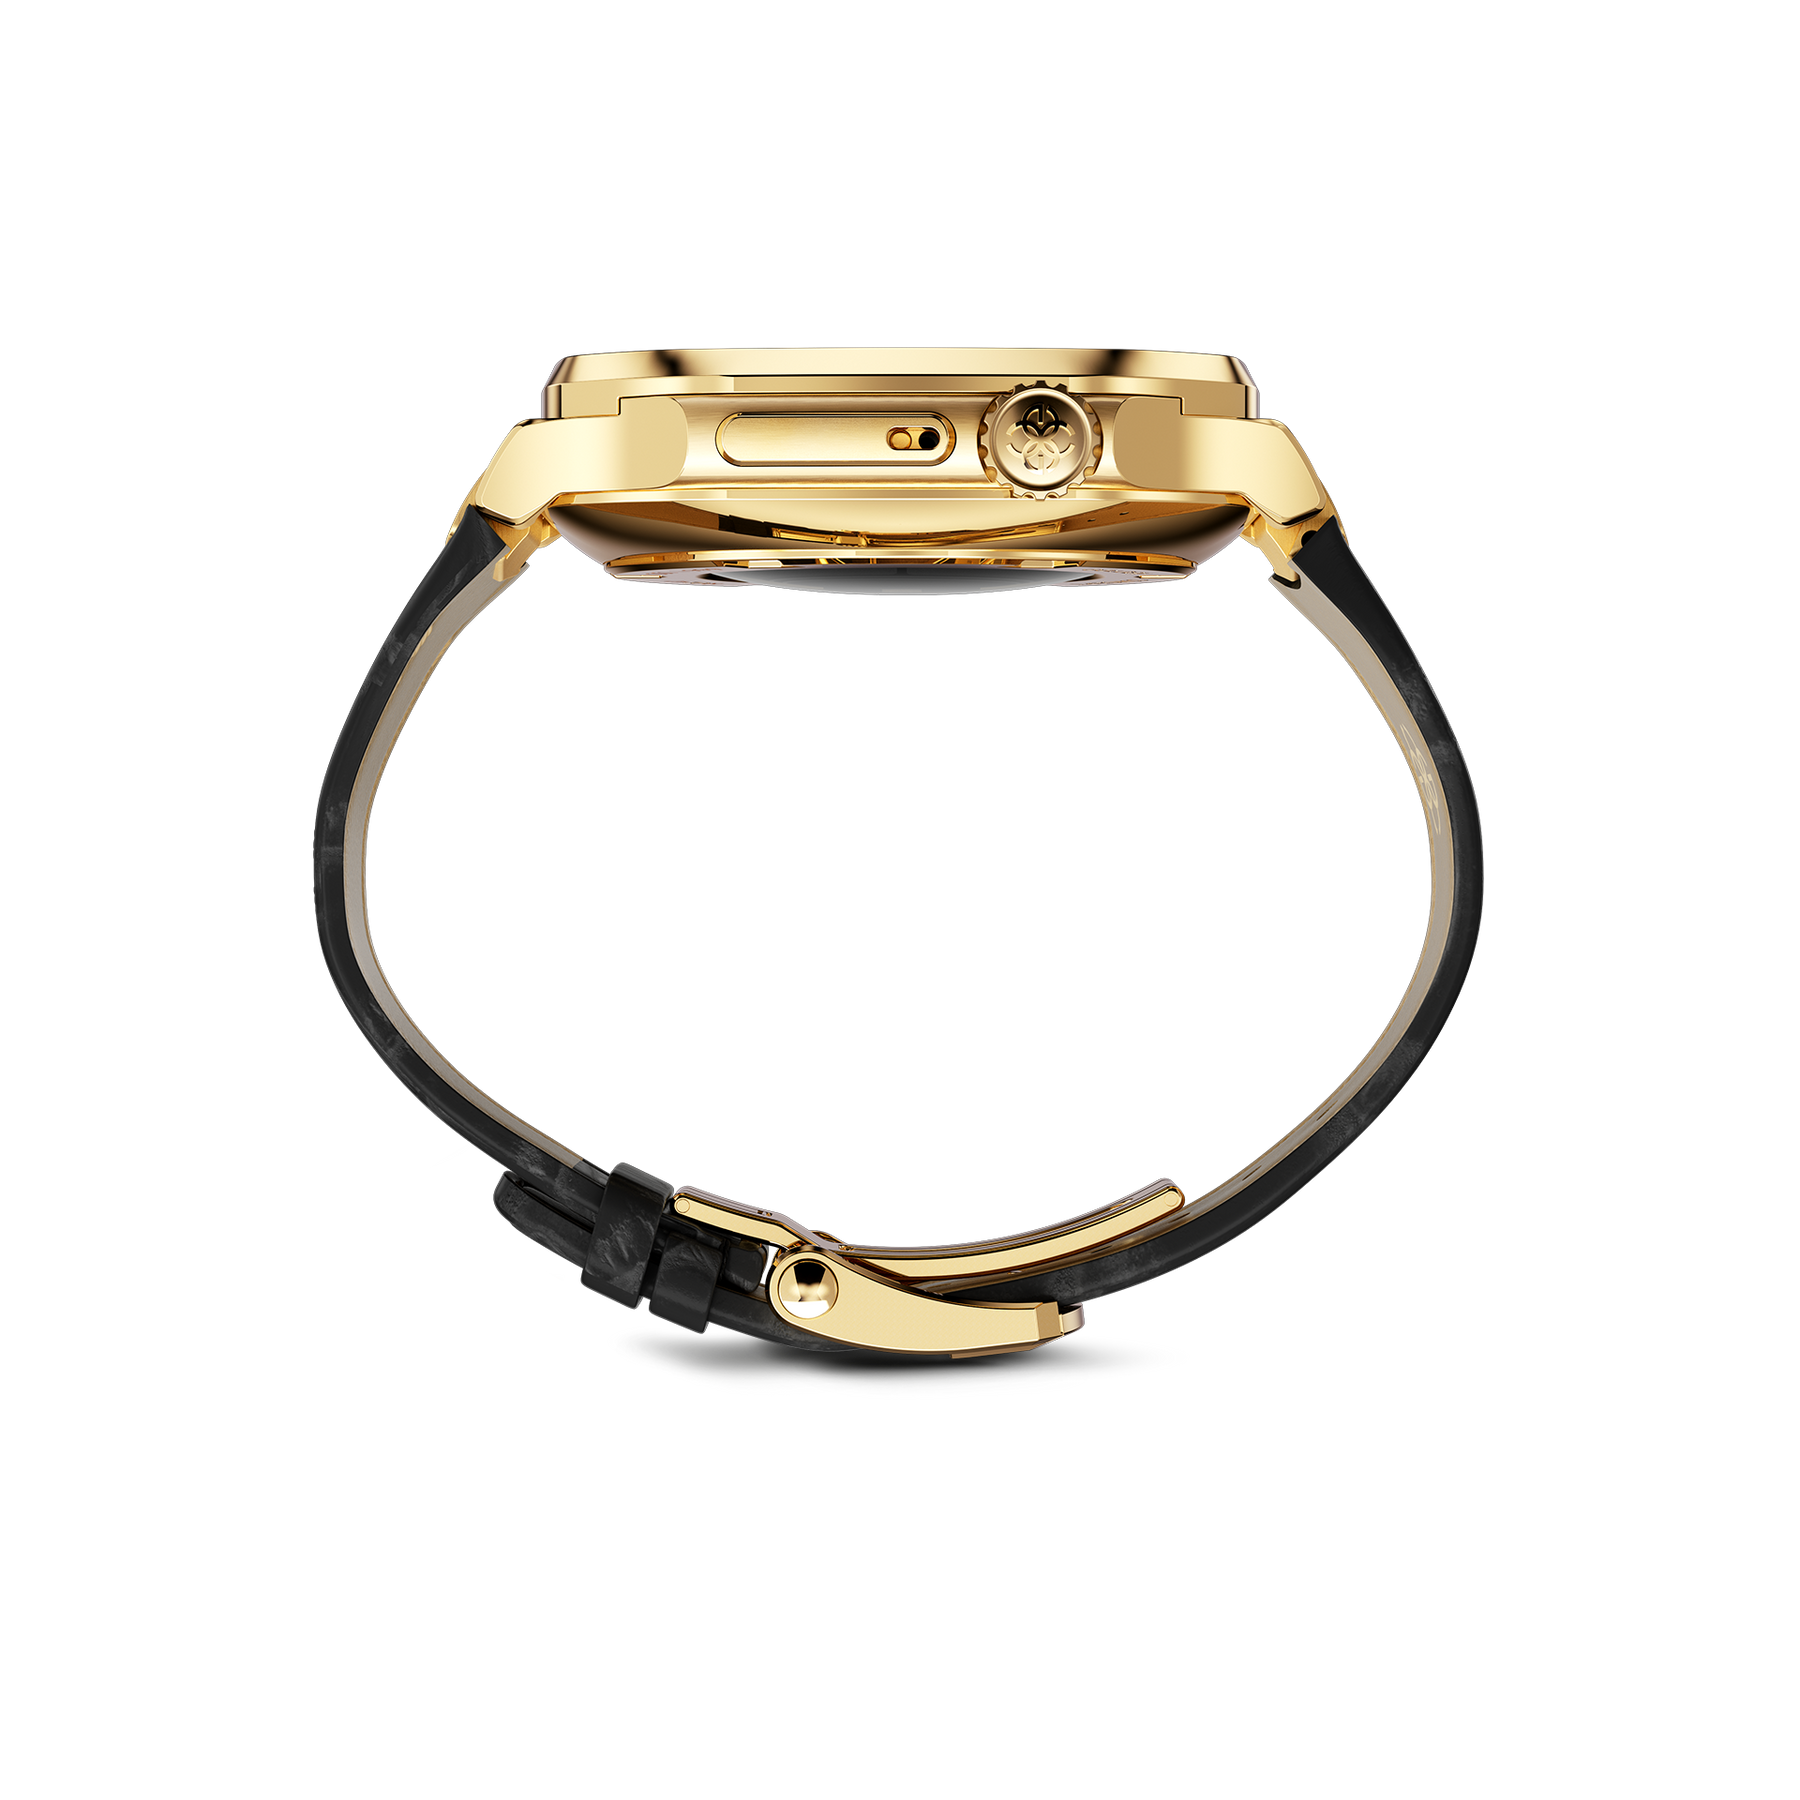 Apple Watch Case ROL41 - Gold